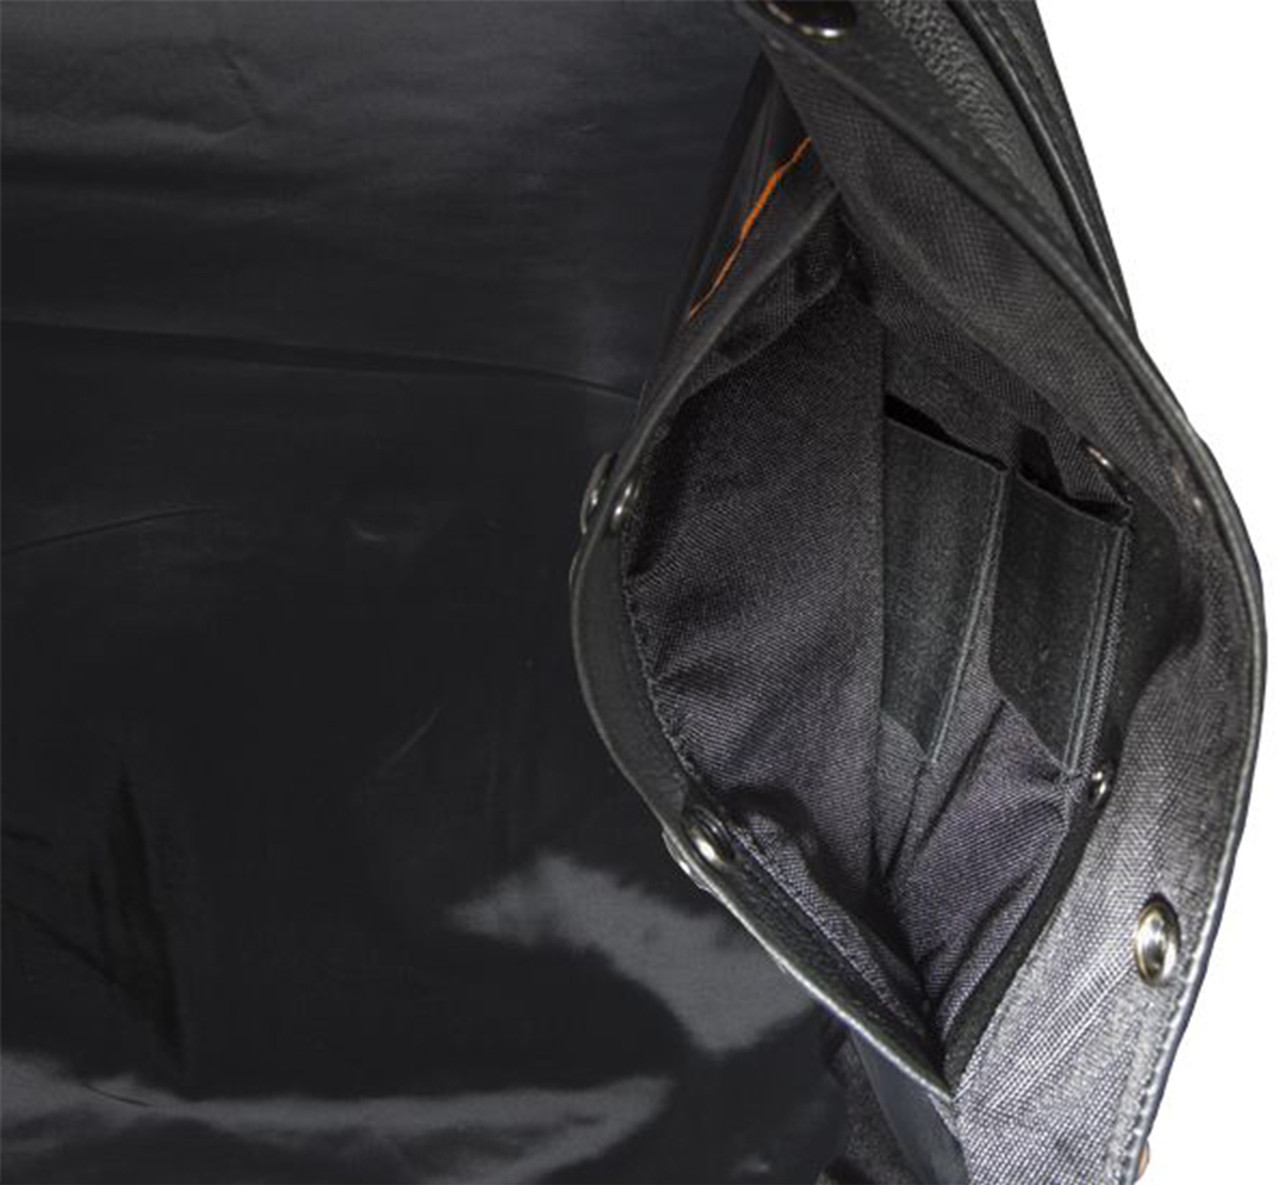 Leather Motorcycle Vest - Men's - Club Style - Gun Pockets - Up To Size 64  - MV8014-11-DL